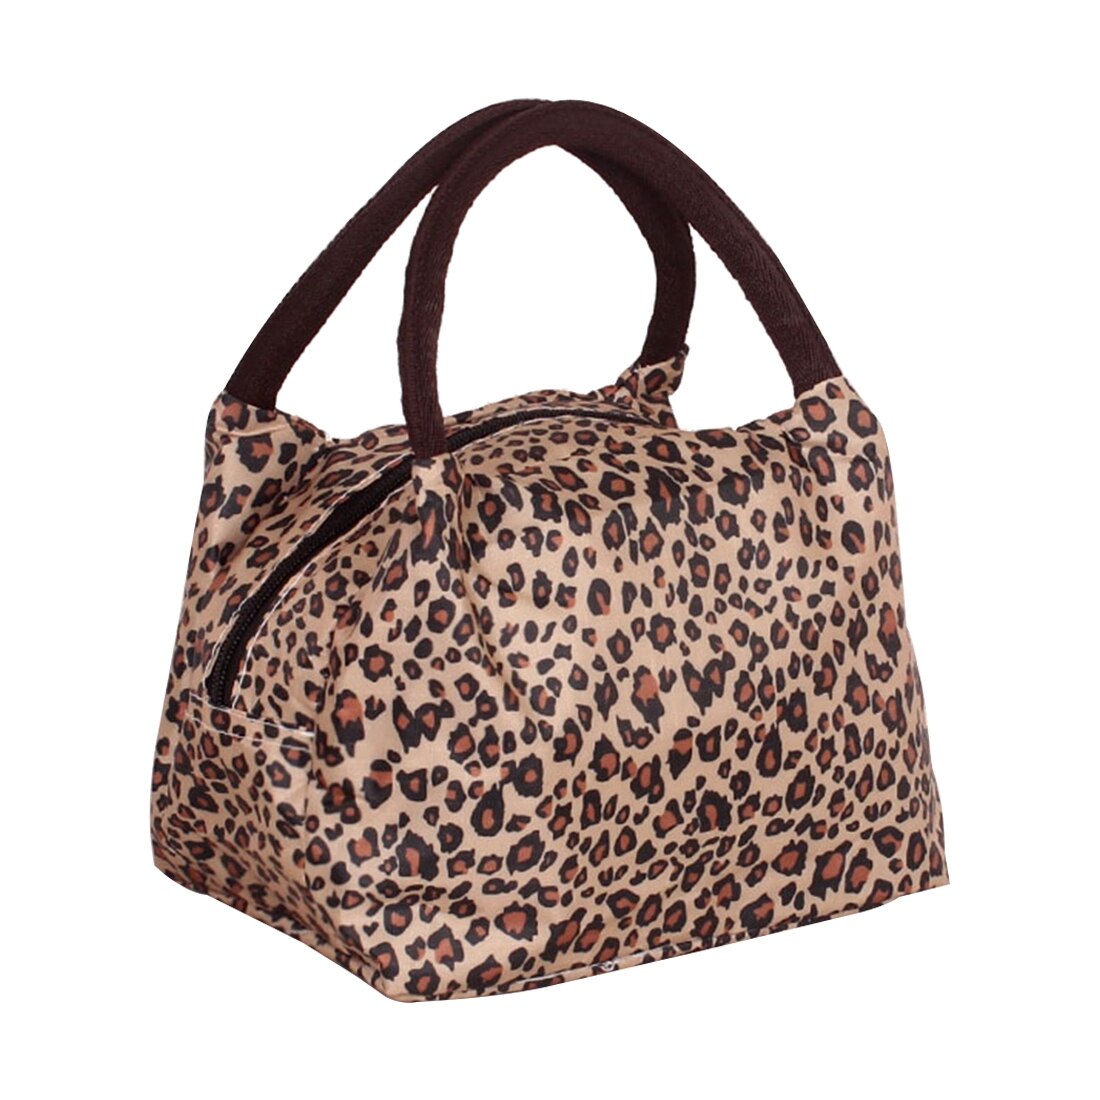 Lady's fashion oxford bag women Handbags lunch shoulder bags for female Messenger Bags(Style 6 Tu Leopard) - ebowsos